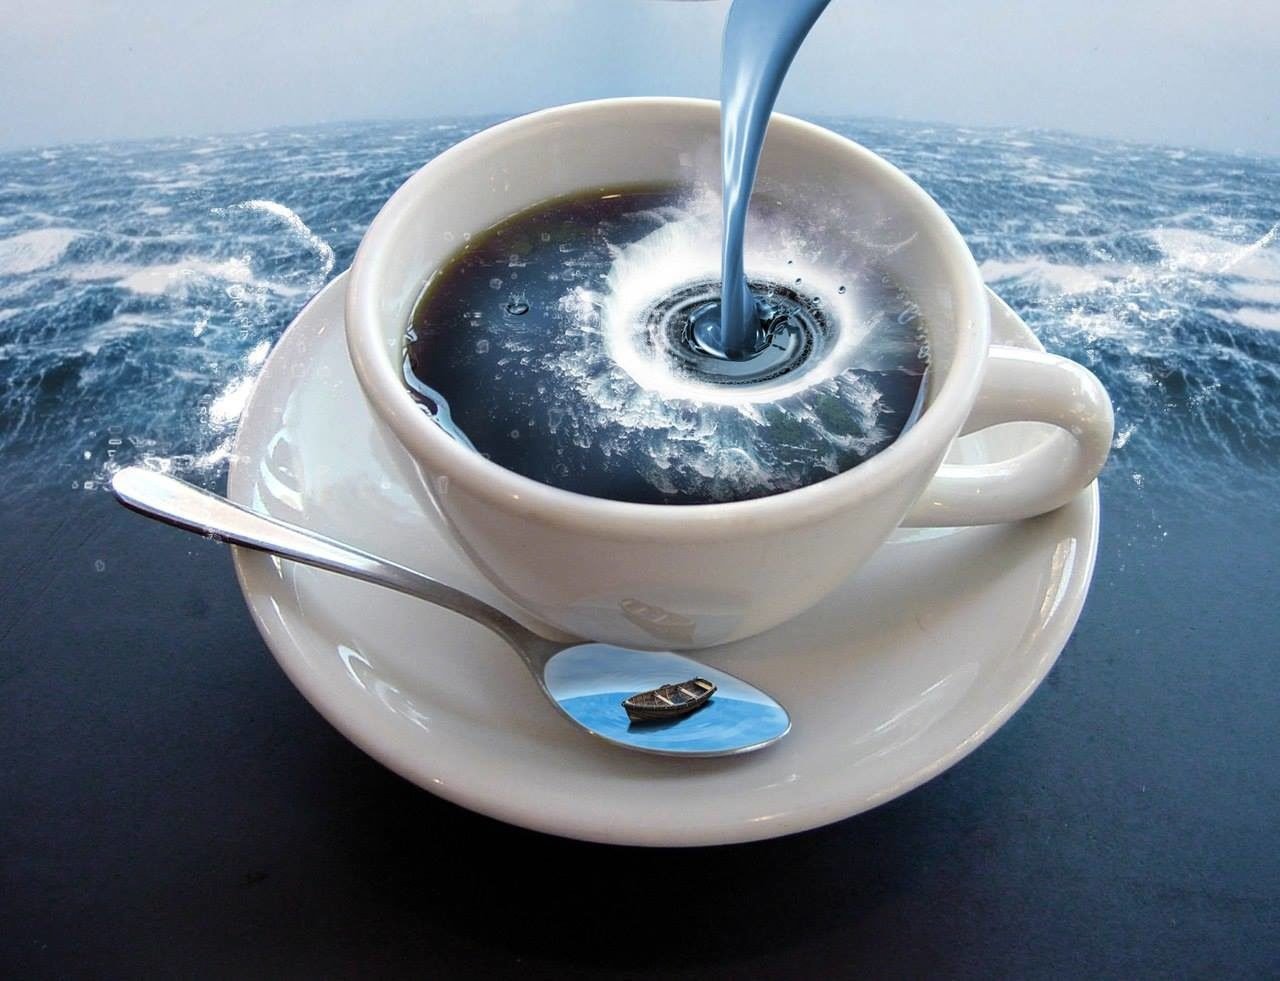 Sea cup. Утро на море с кофе. Чашечка моря. Доброе утро море и кофе. Чашка кофе на море.